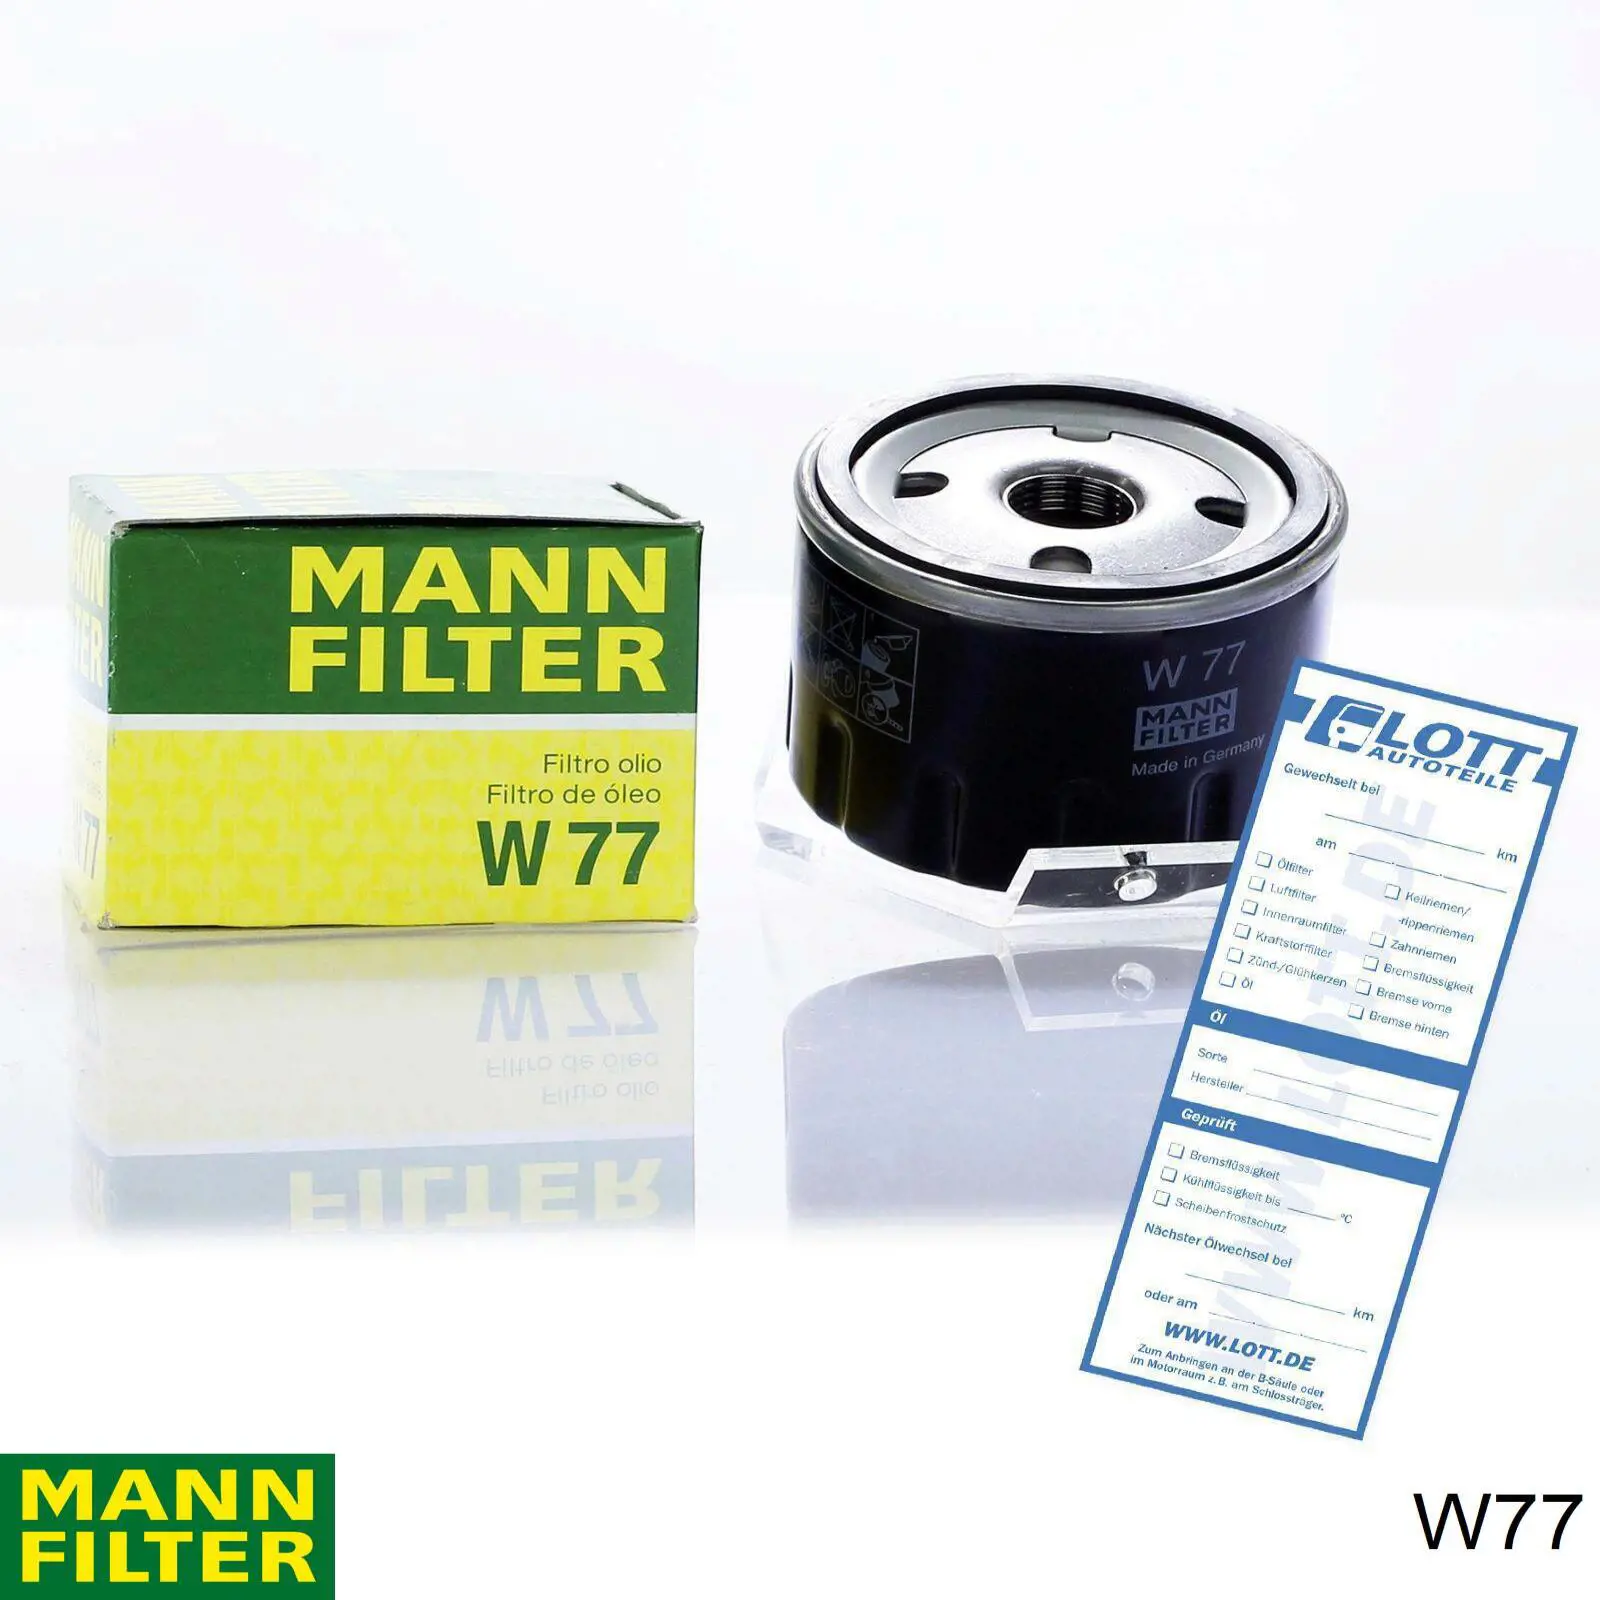 W77 Mann-Filter масляный фильтр